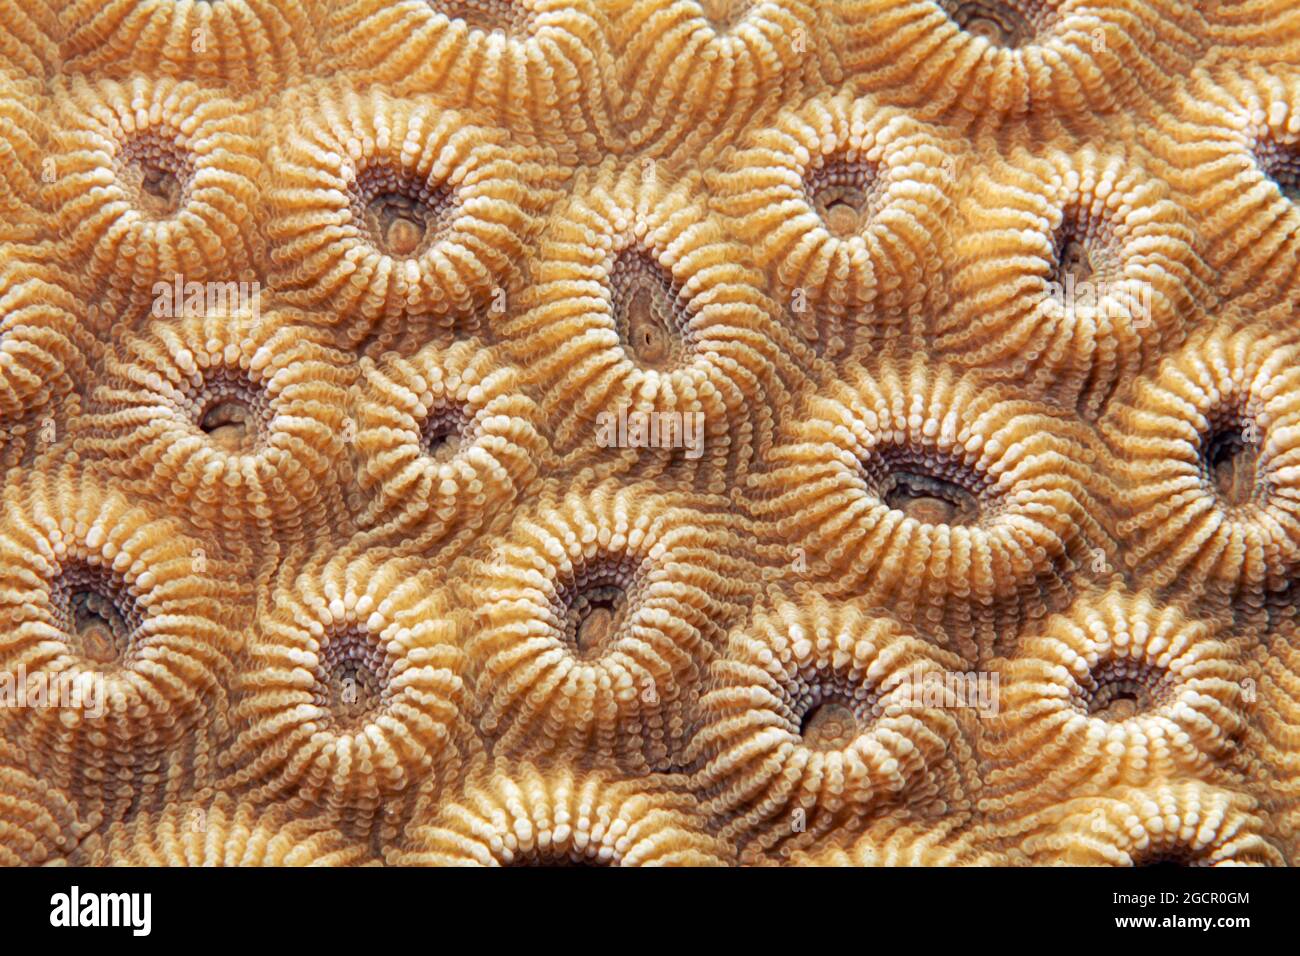 Stone coral (Favia favus), detail with indented polyps, Red Sea, Aqaba, Kingdom of Jordan Stock Photo